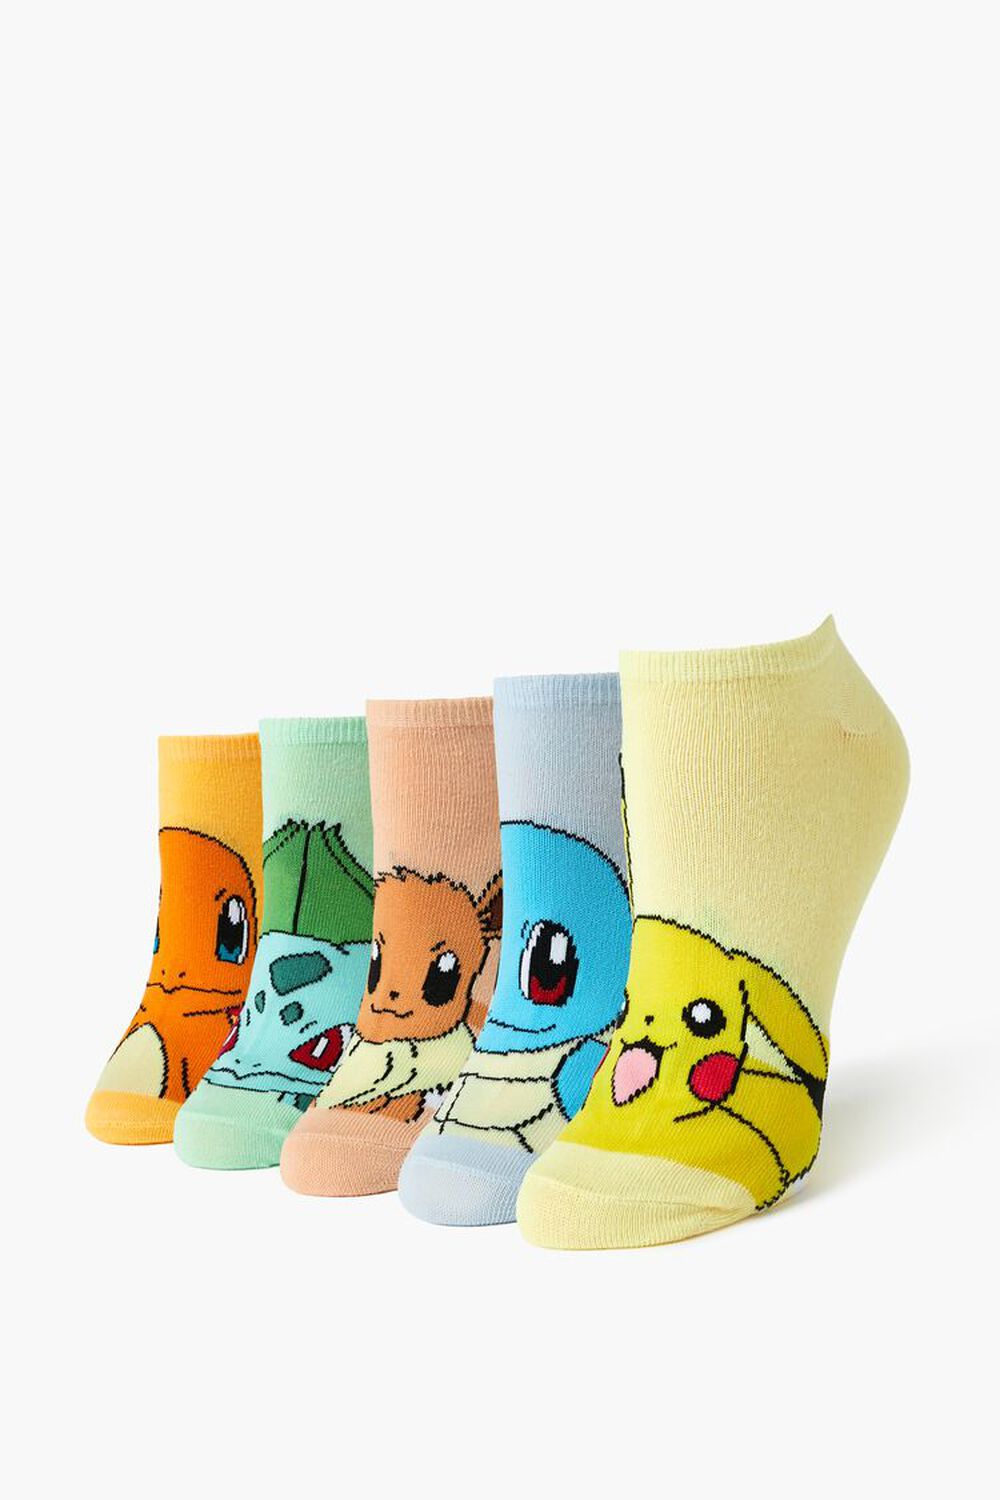 Pokémon Graphic Ankle Socks Set - 5 pack